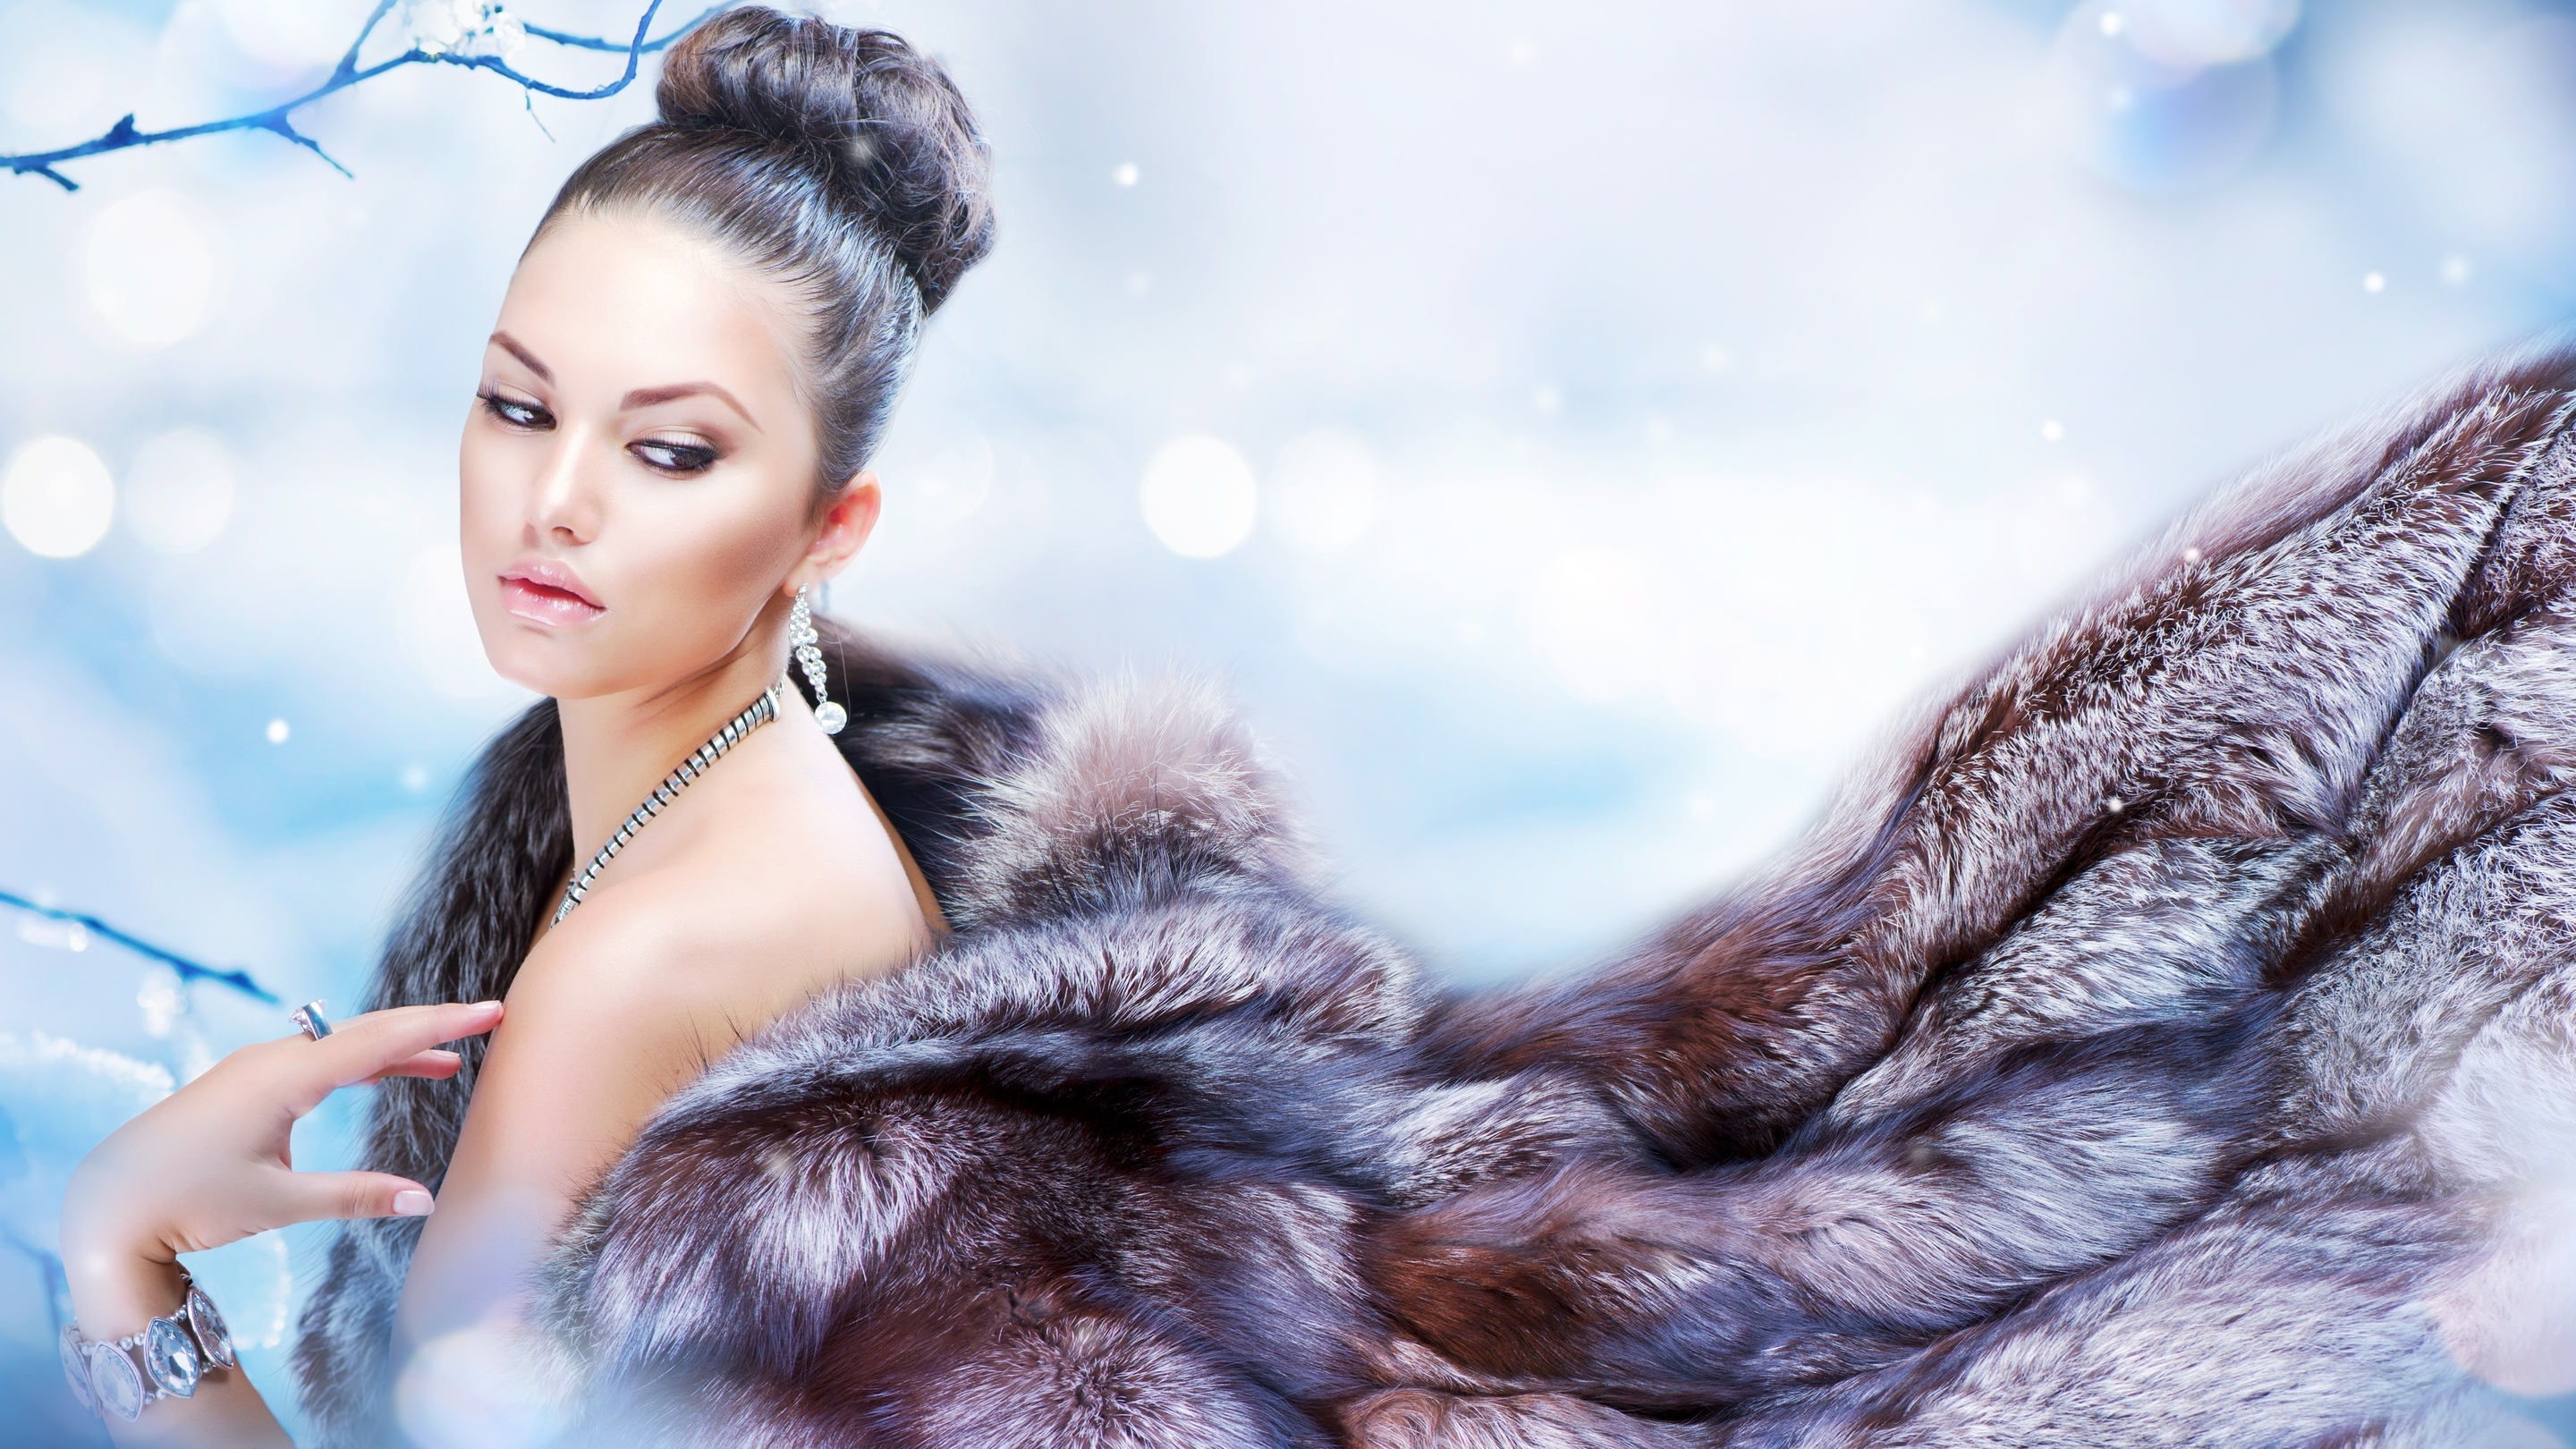 Image: Girl, makeup, hair, bundle, decoration, fur, fur coat, winter